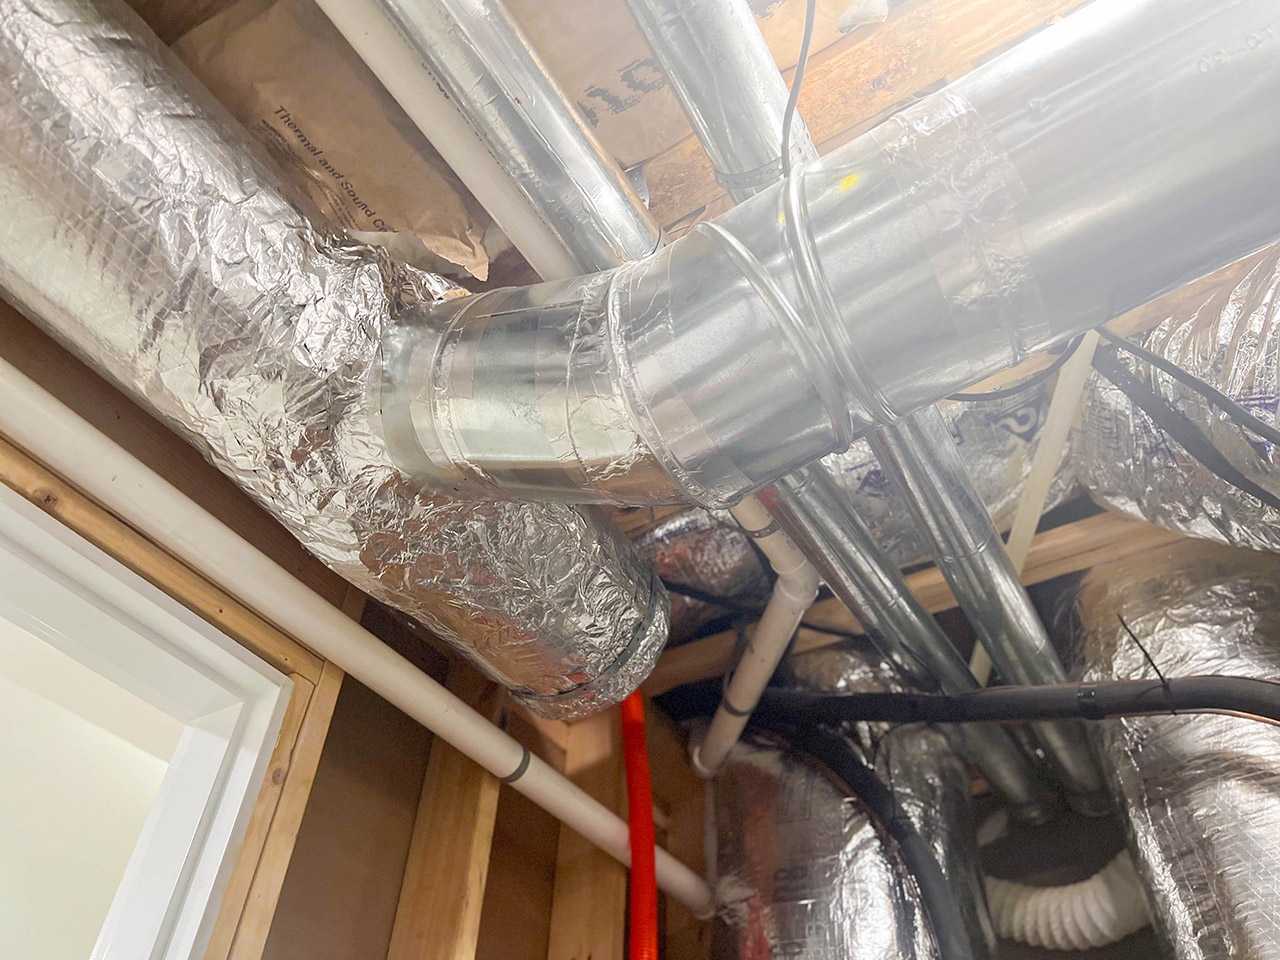 HVAC ventilation - duct work